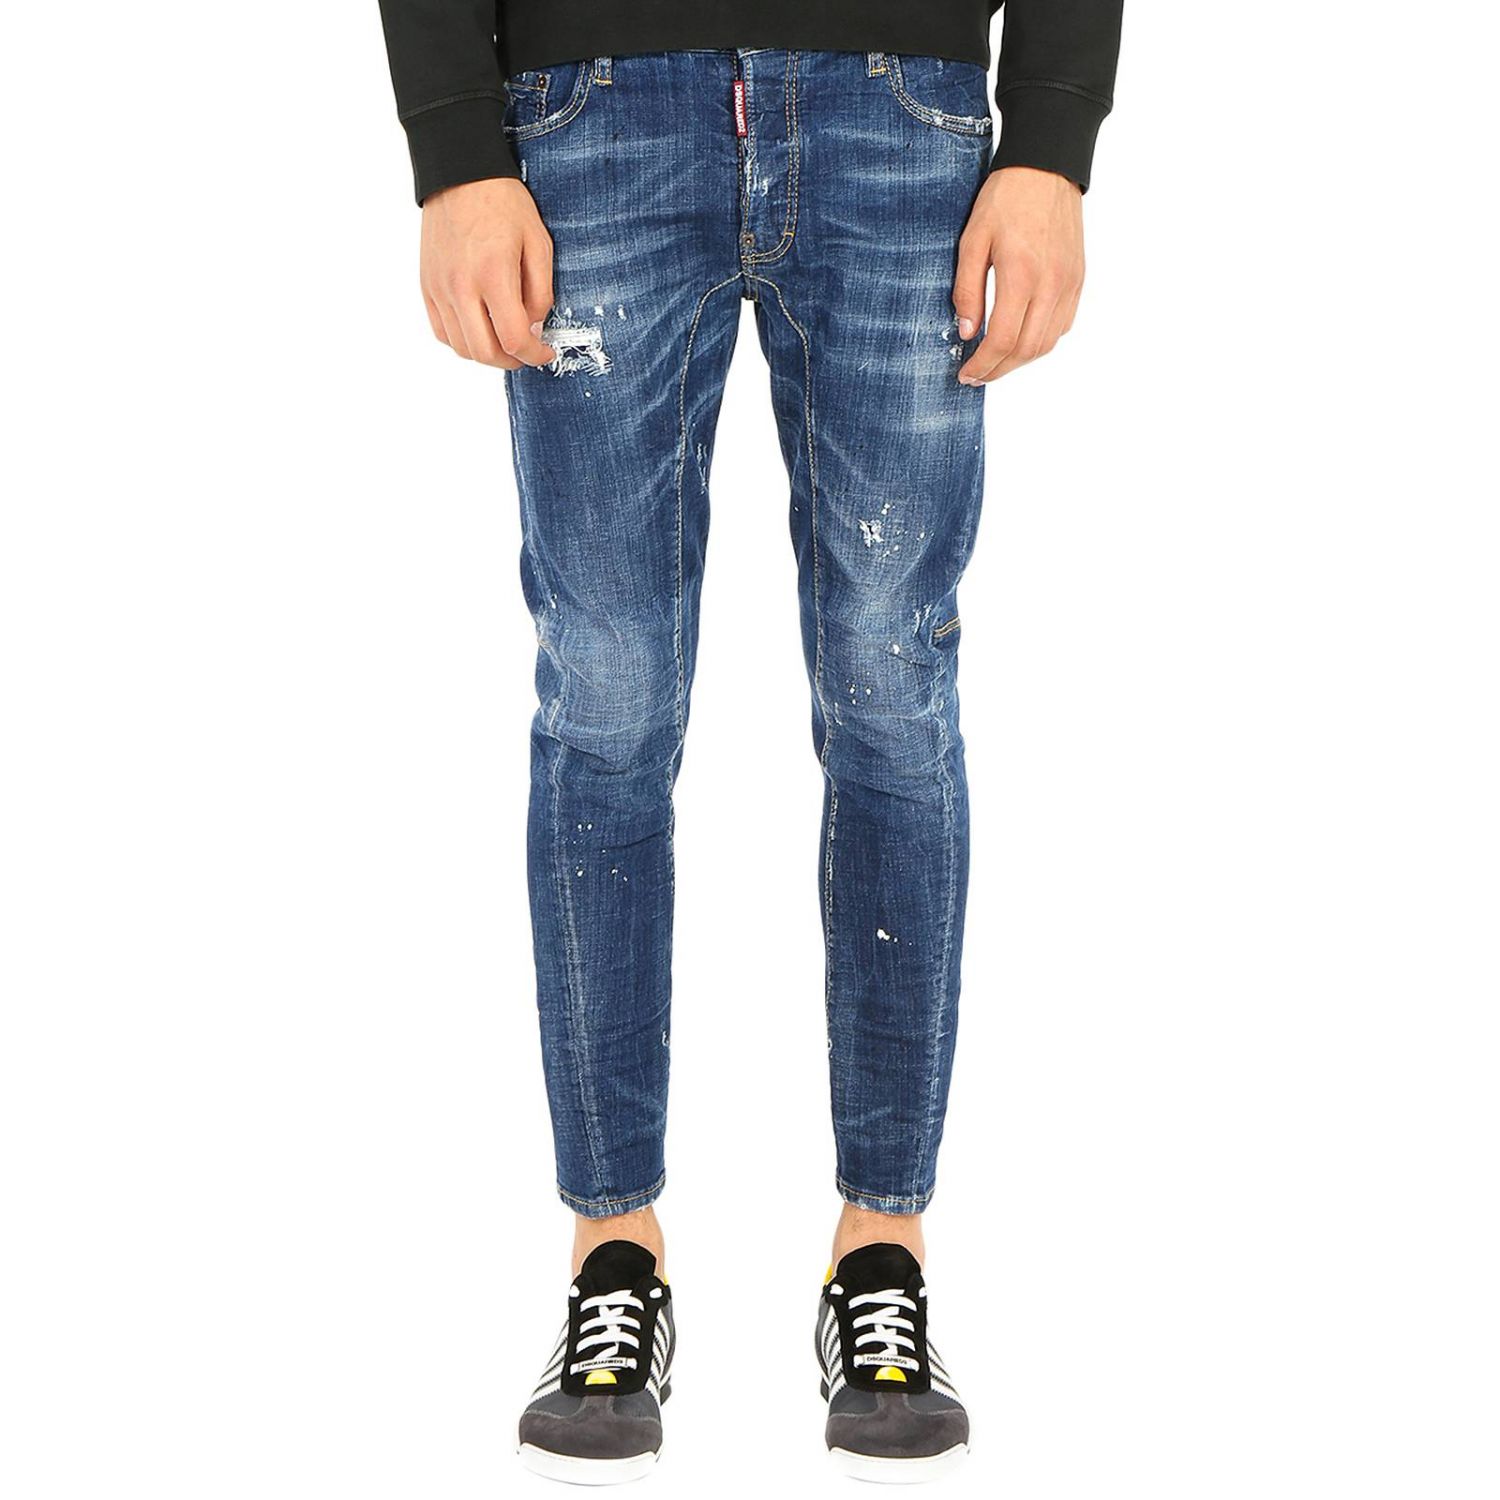 Dsquared2 Outlet: Jeans for men | Jeans Dsquared2 Men Blue | Jeans ...